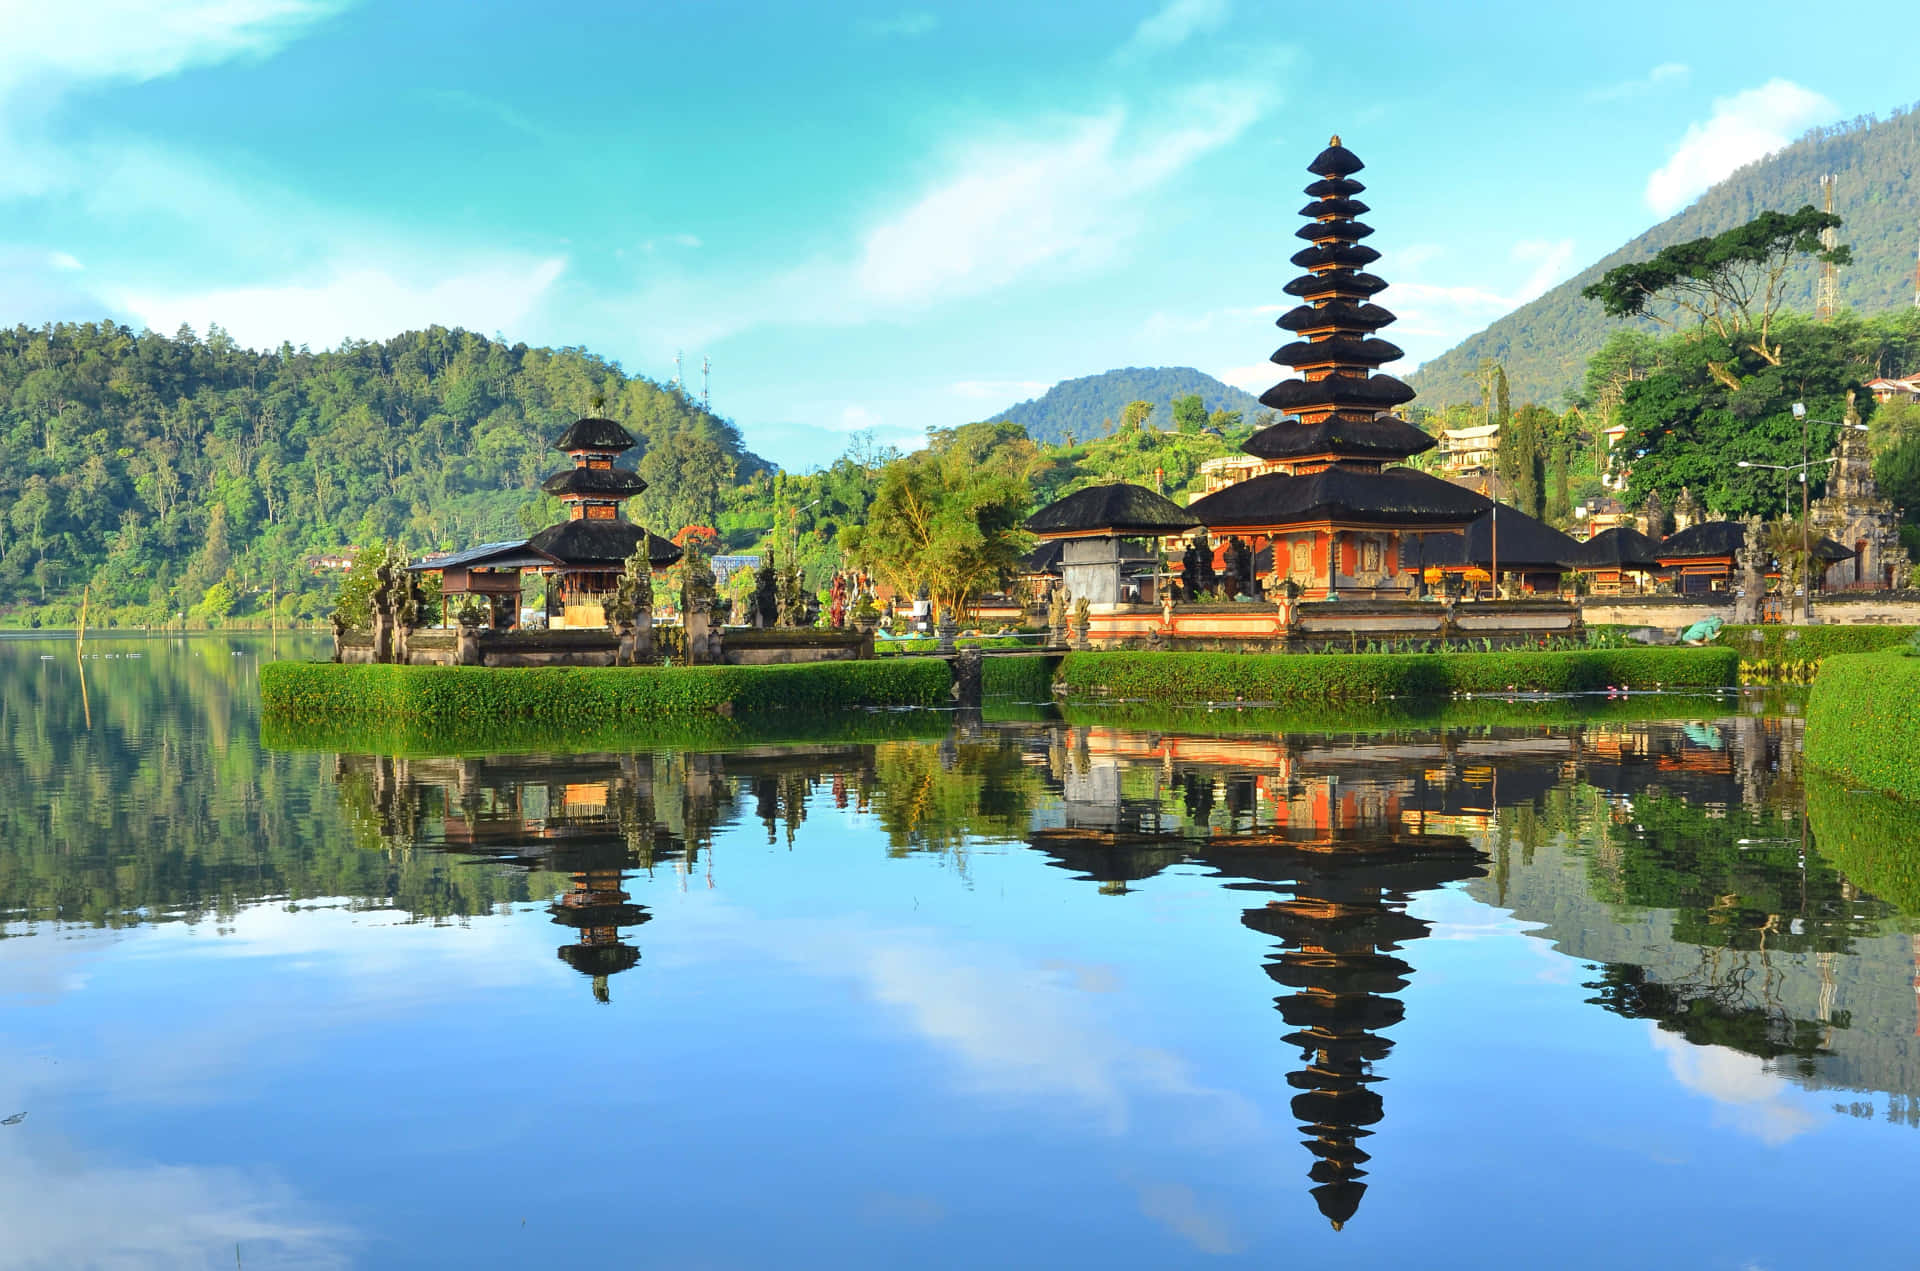 Majestic mountains of Bali, Indonesia